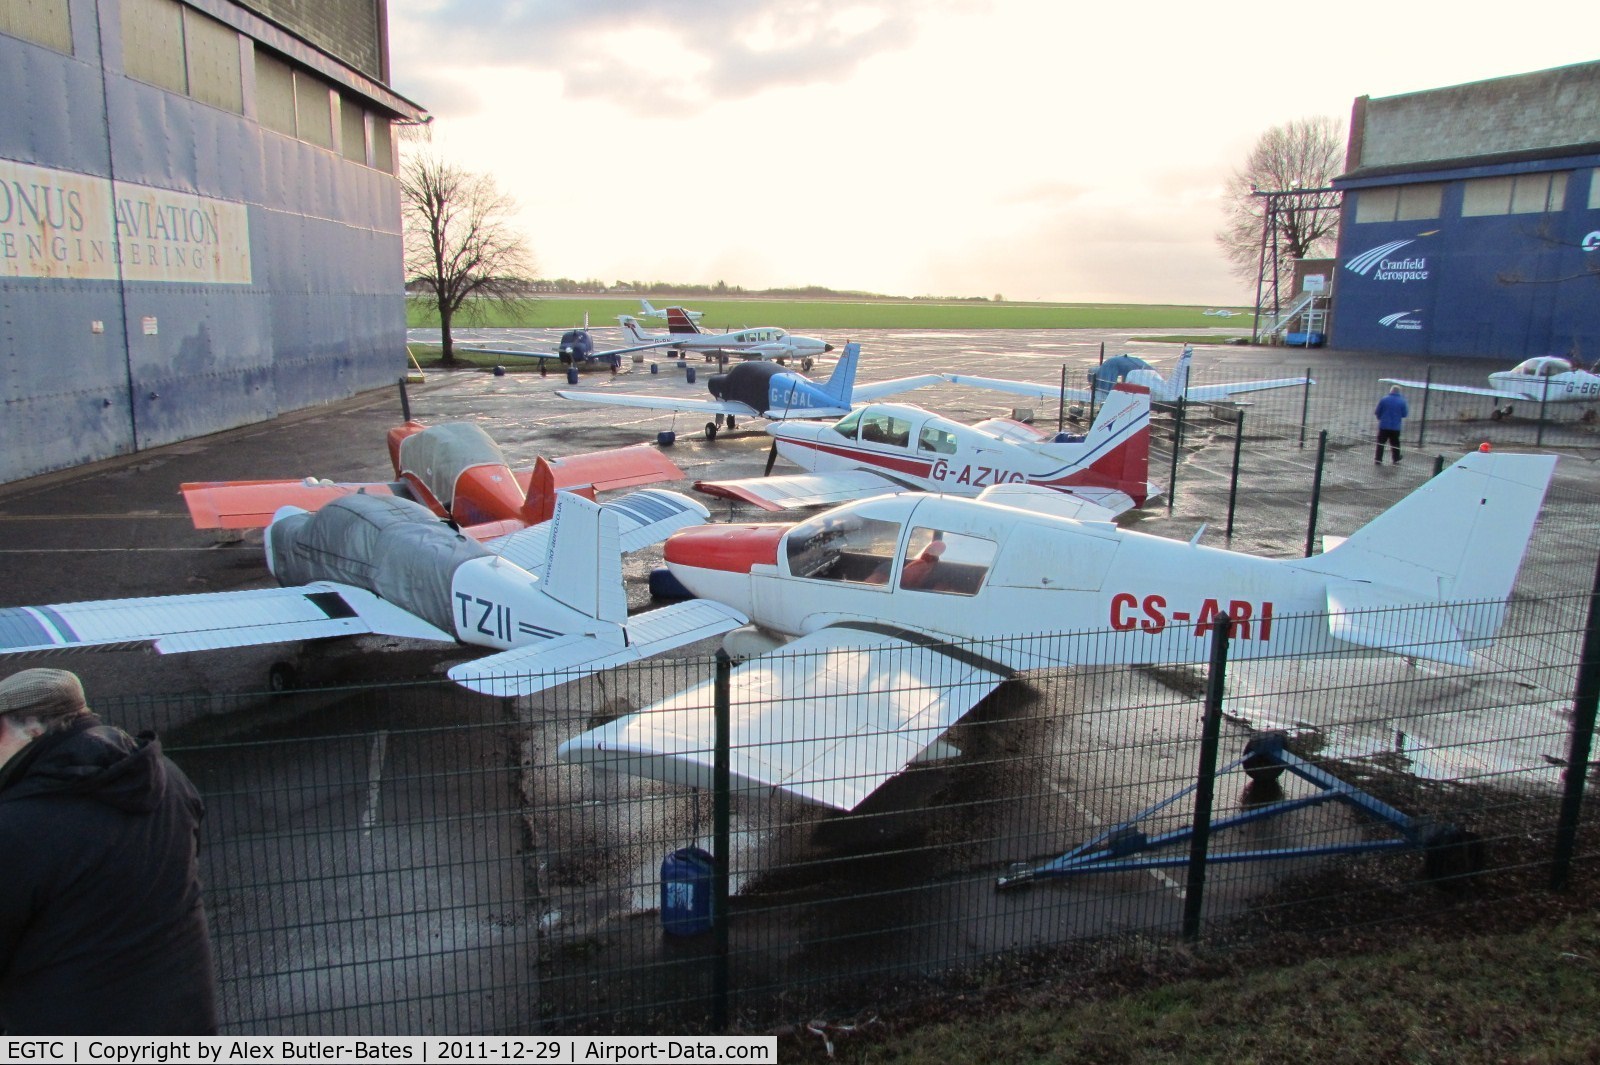 Cranfield Airport, Cranfield, England United Kingdom (EGTC) - An overview of the Bonus Aviation ramp